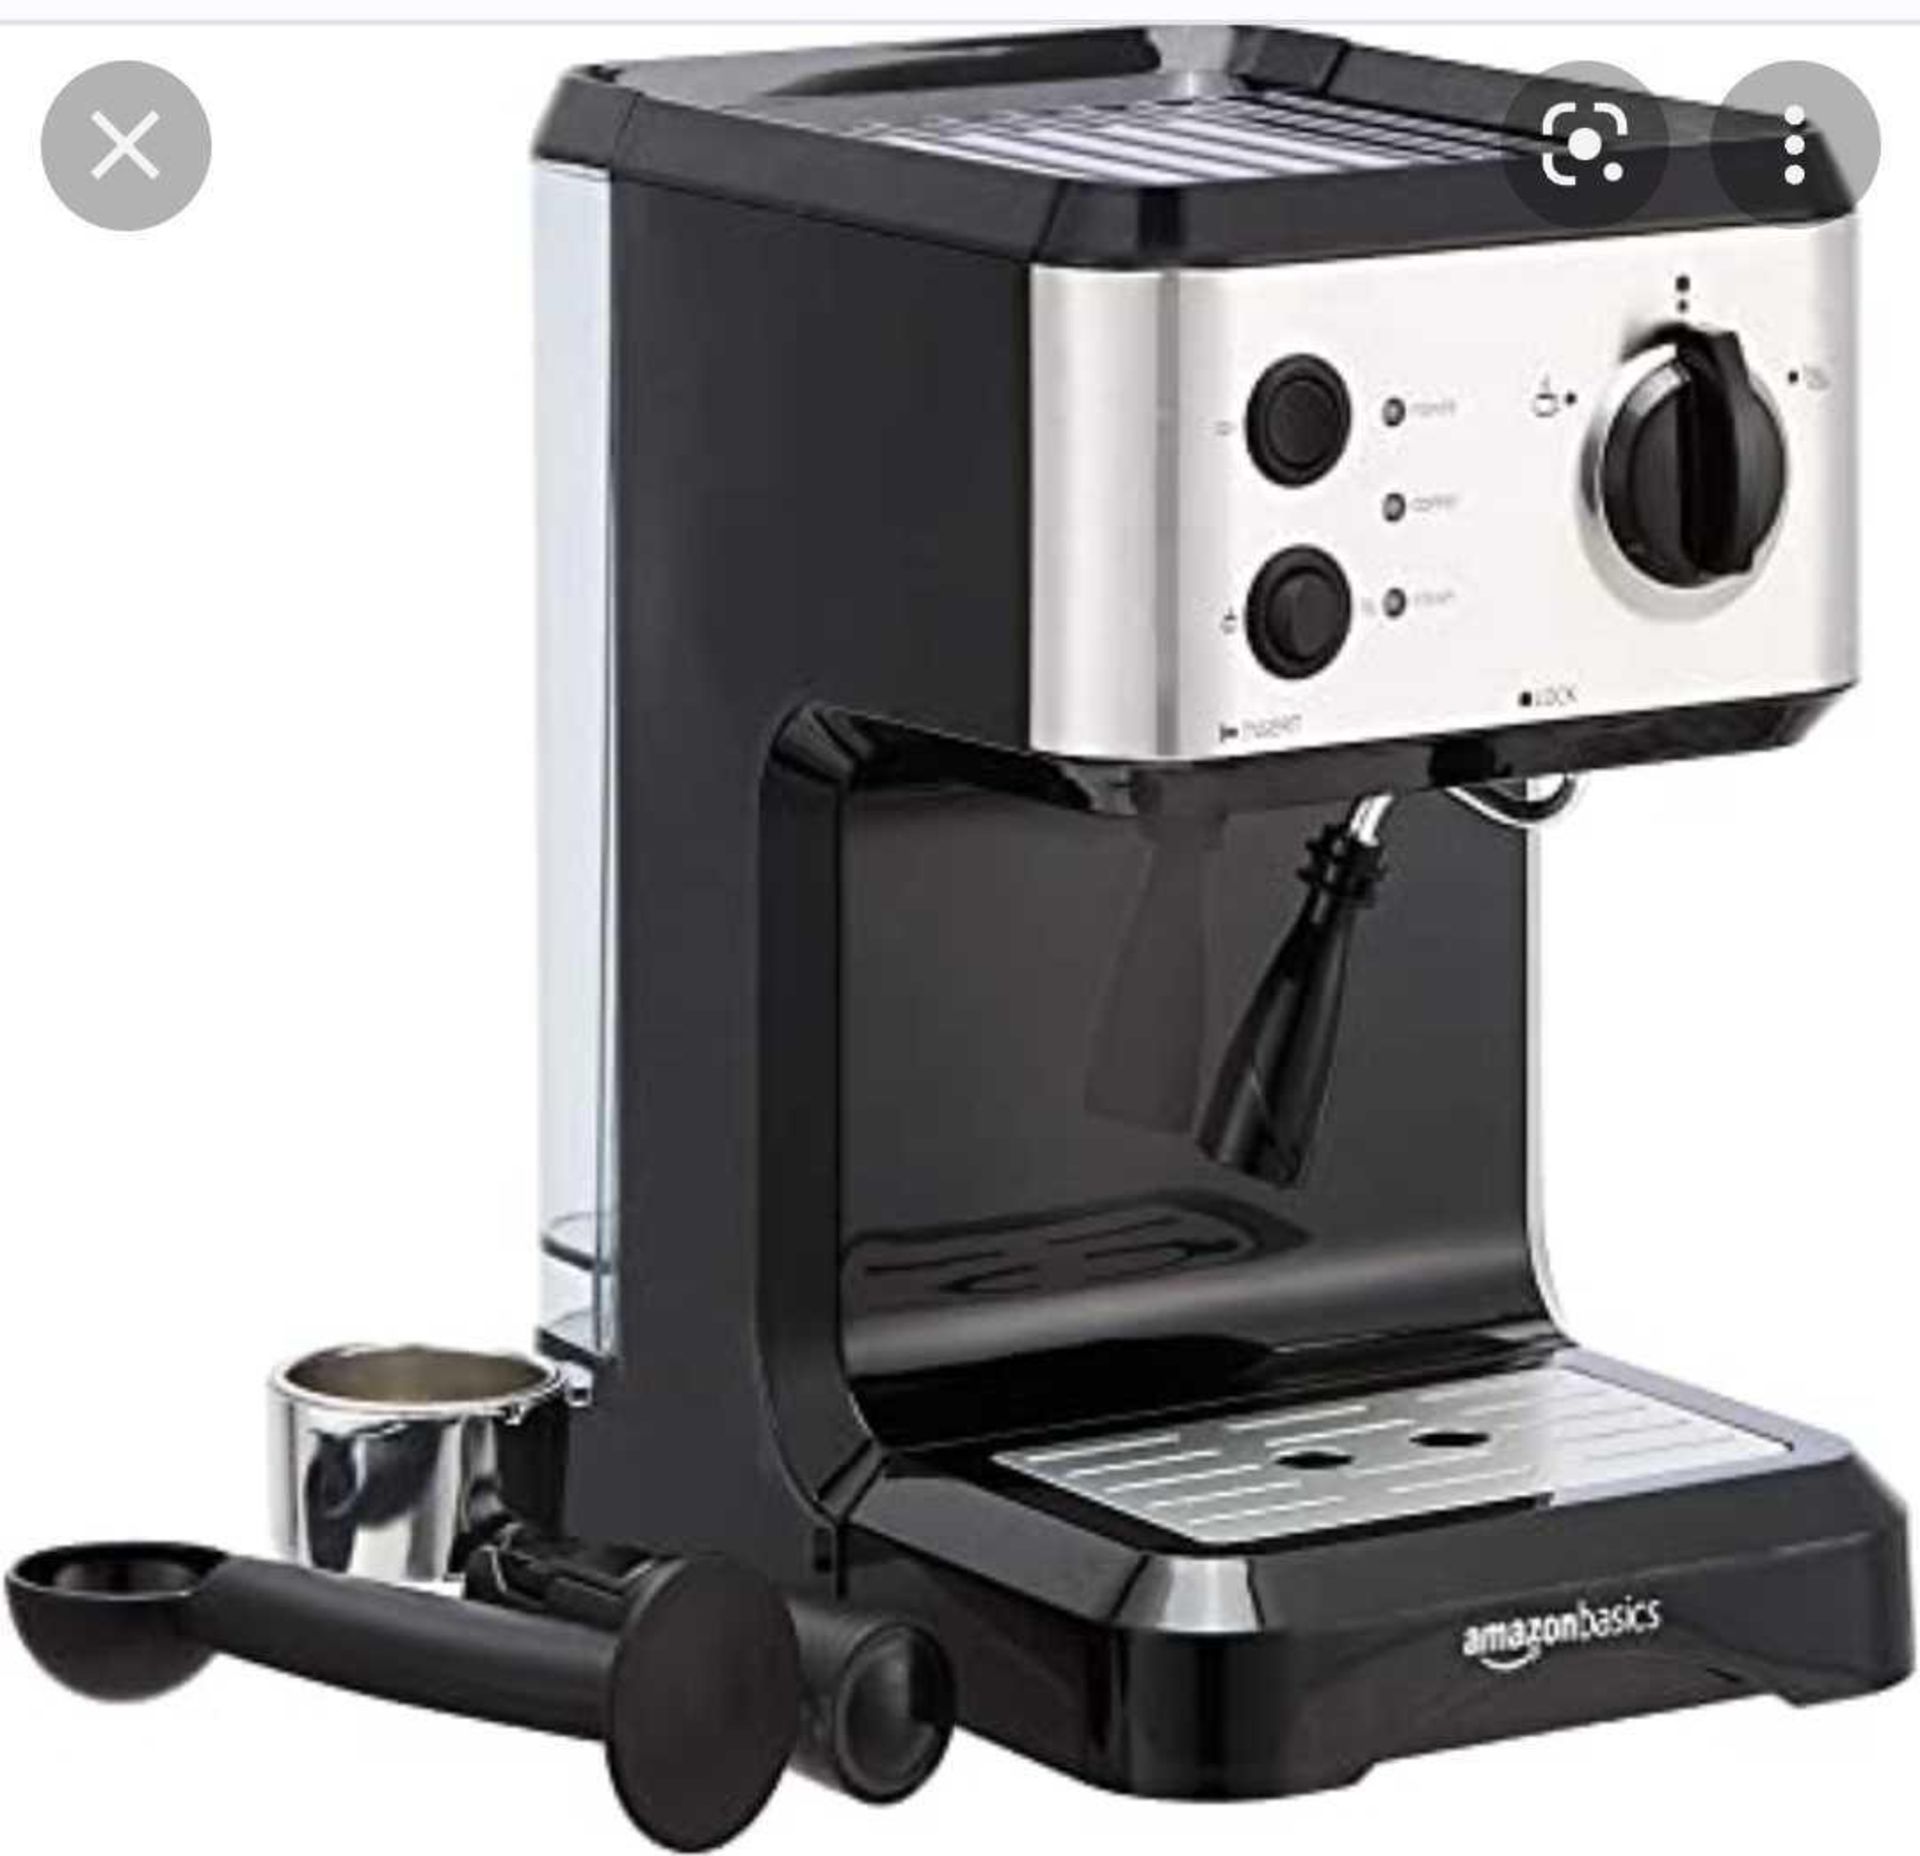 RRP £100 Boxed Amazon Basics Espresso Coffee Maker - Image 2 of 2